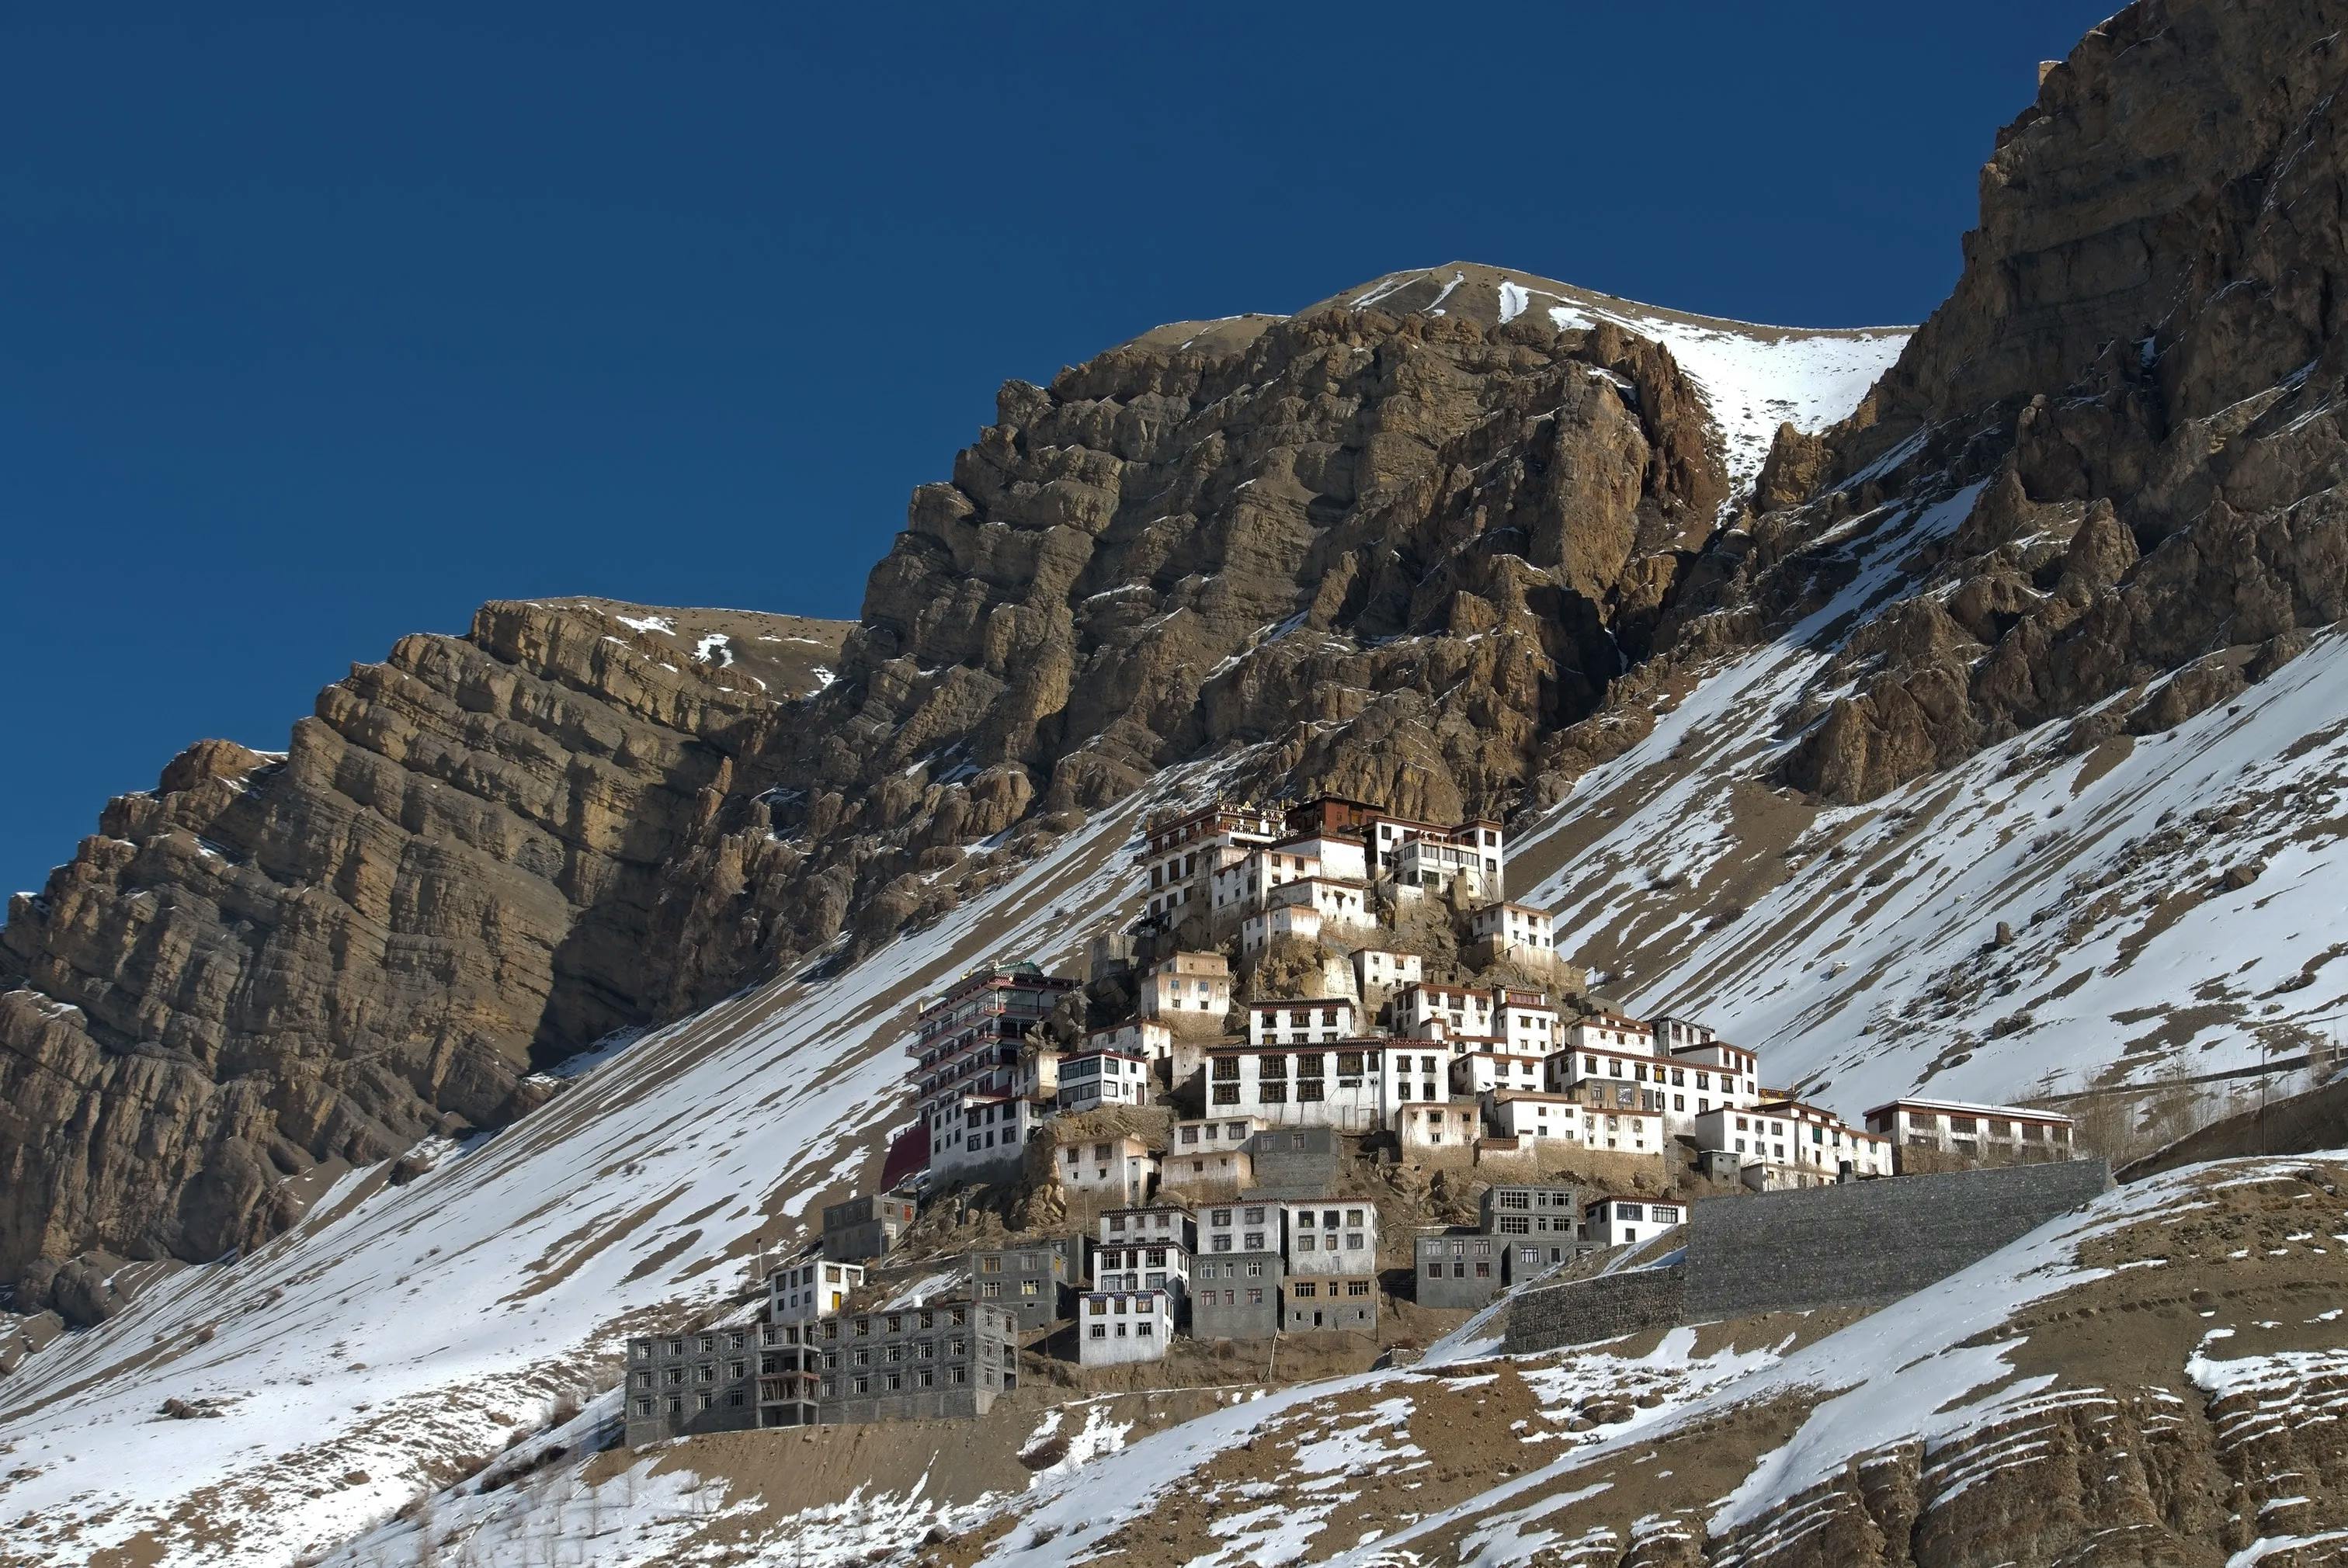 Spiti Winter Trekking Adventure: Tranquil Monastery Amidst Snowy Peaks